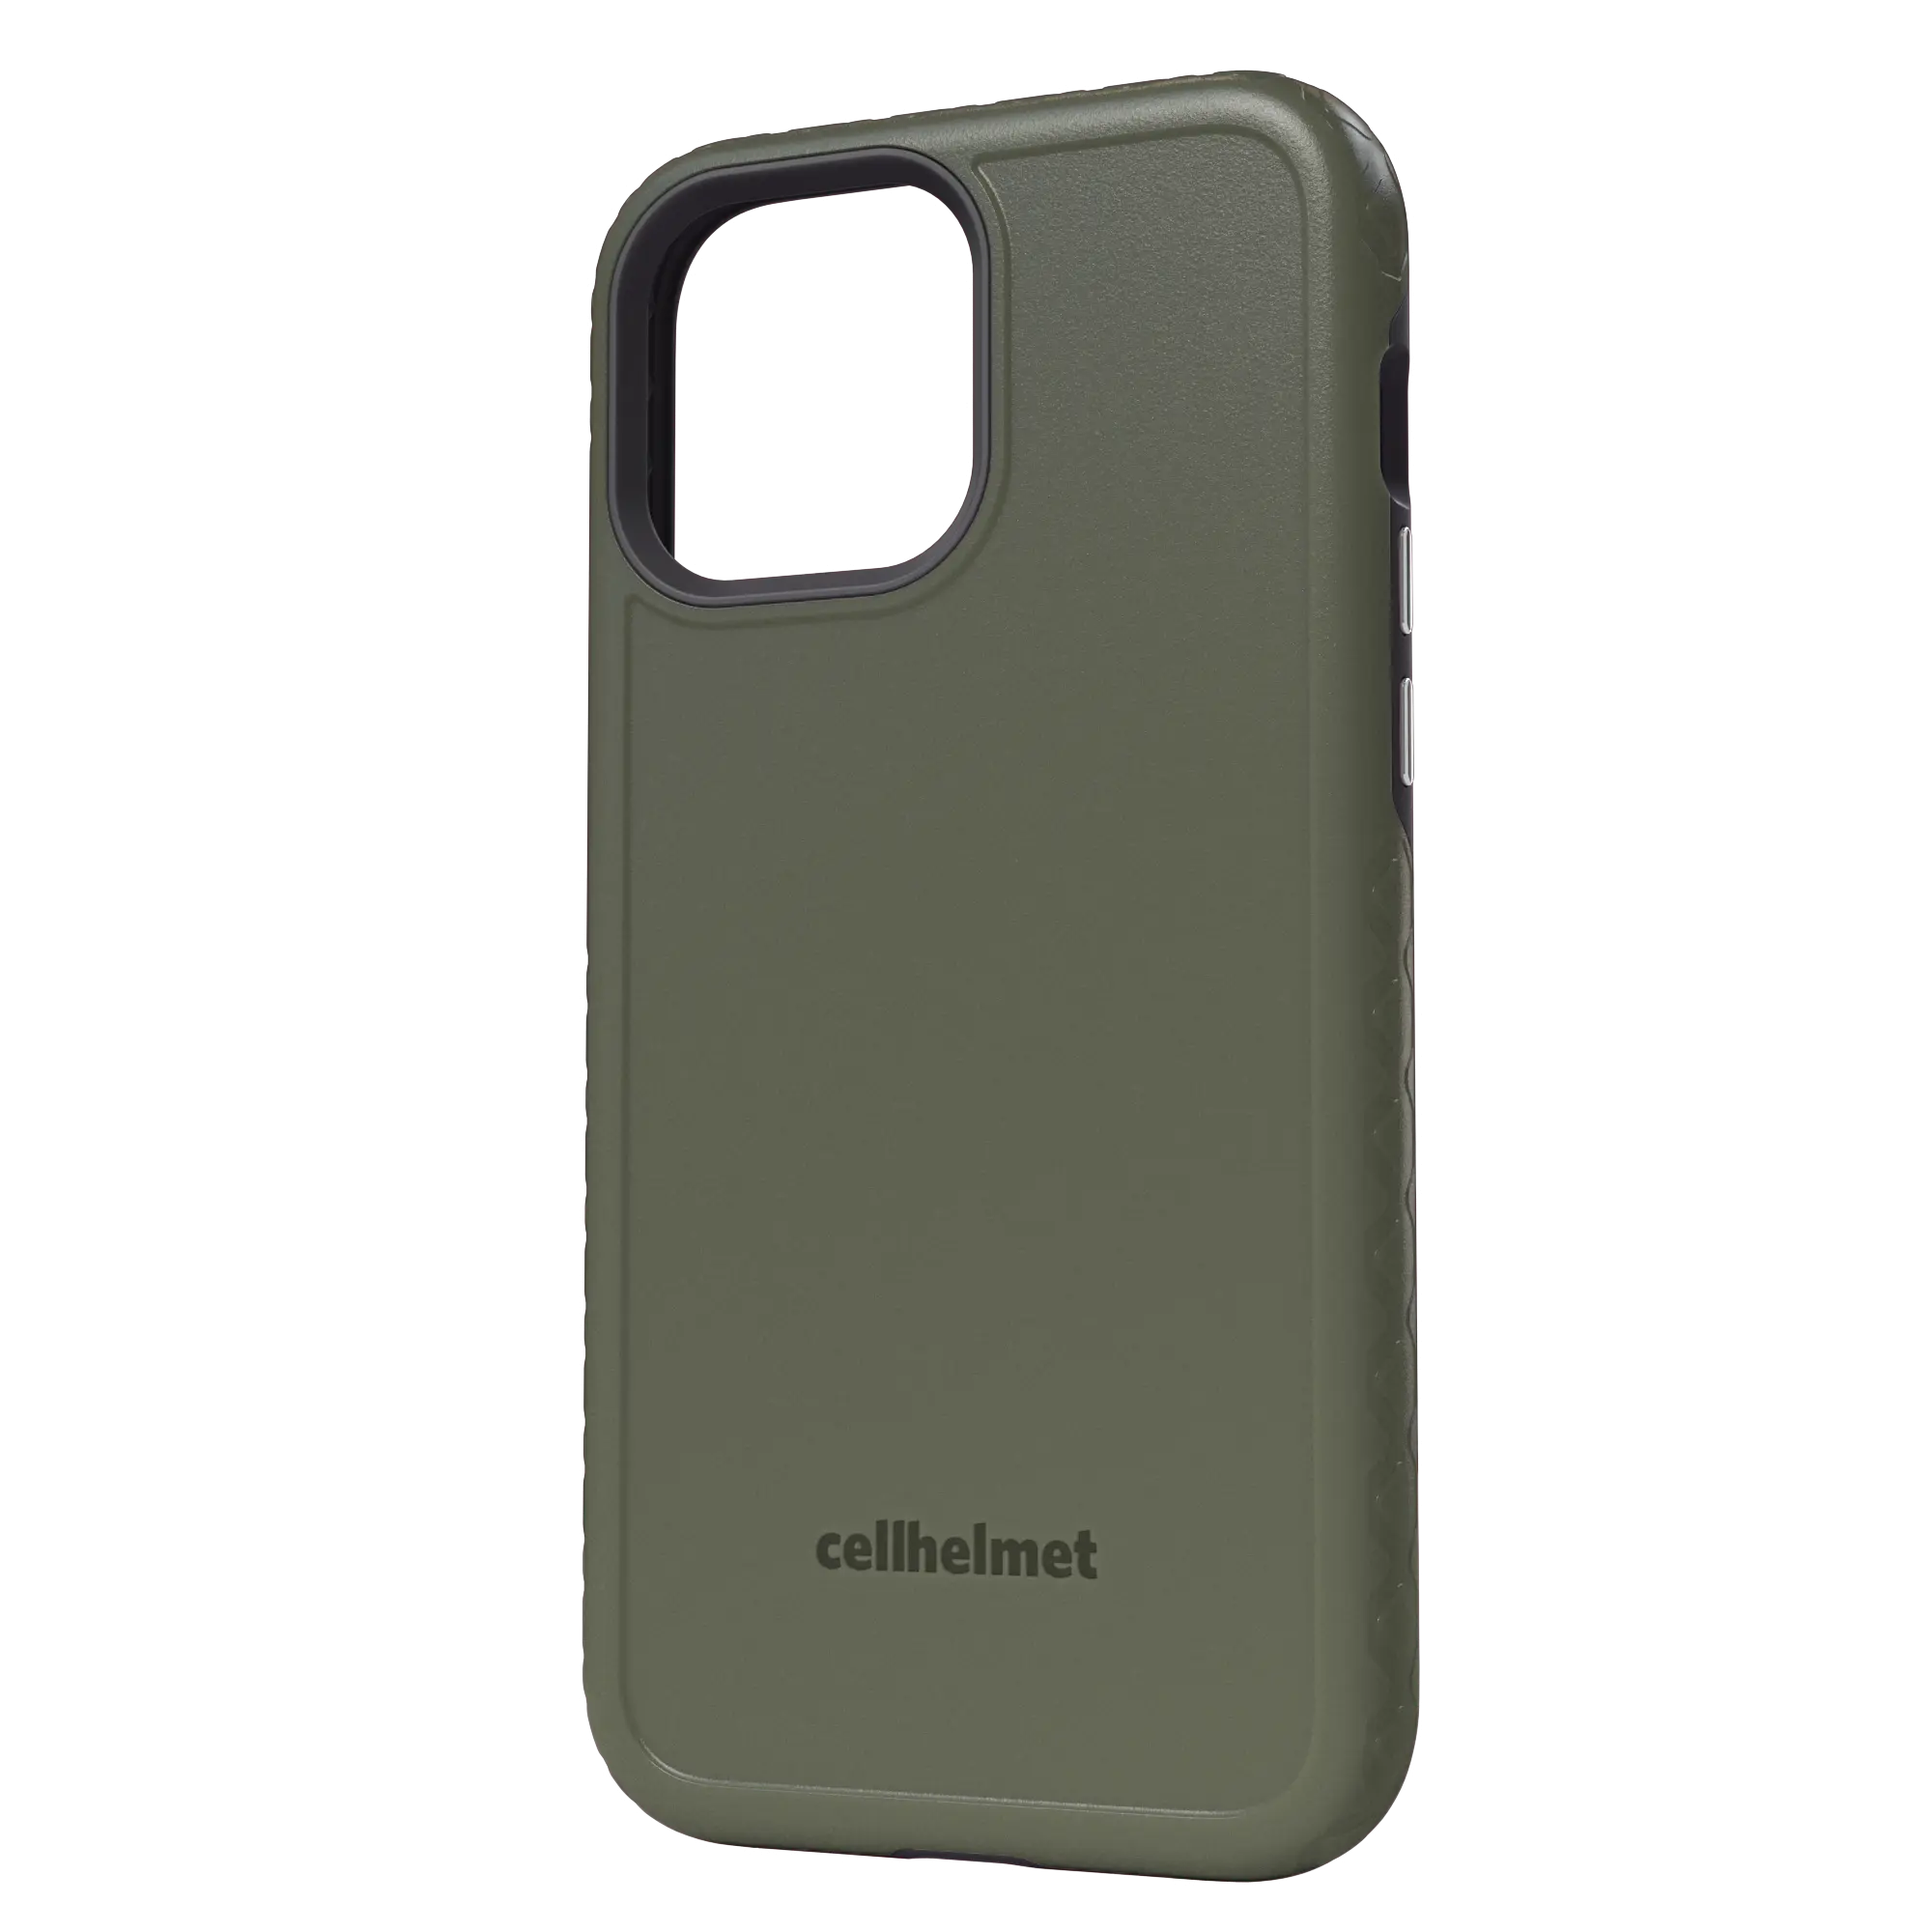 Green cellhelmet Customizable Case for iPhone 13 Pro Max